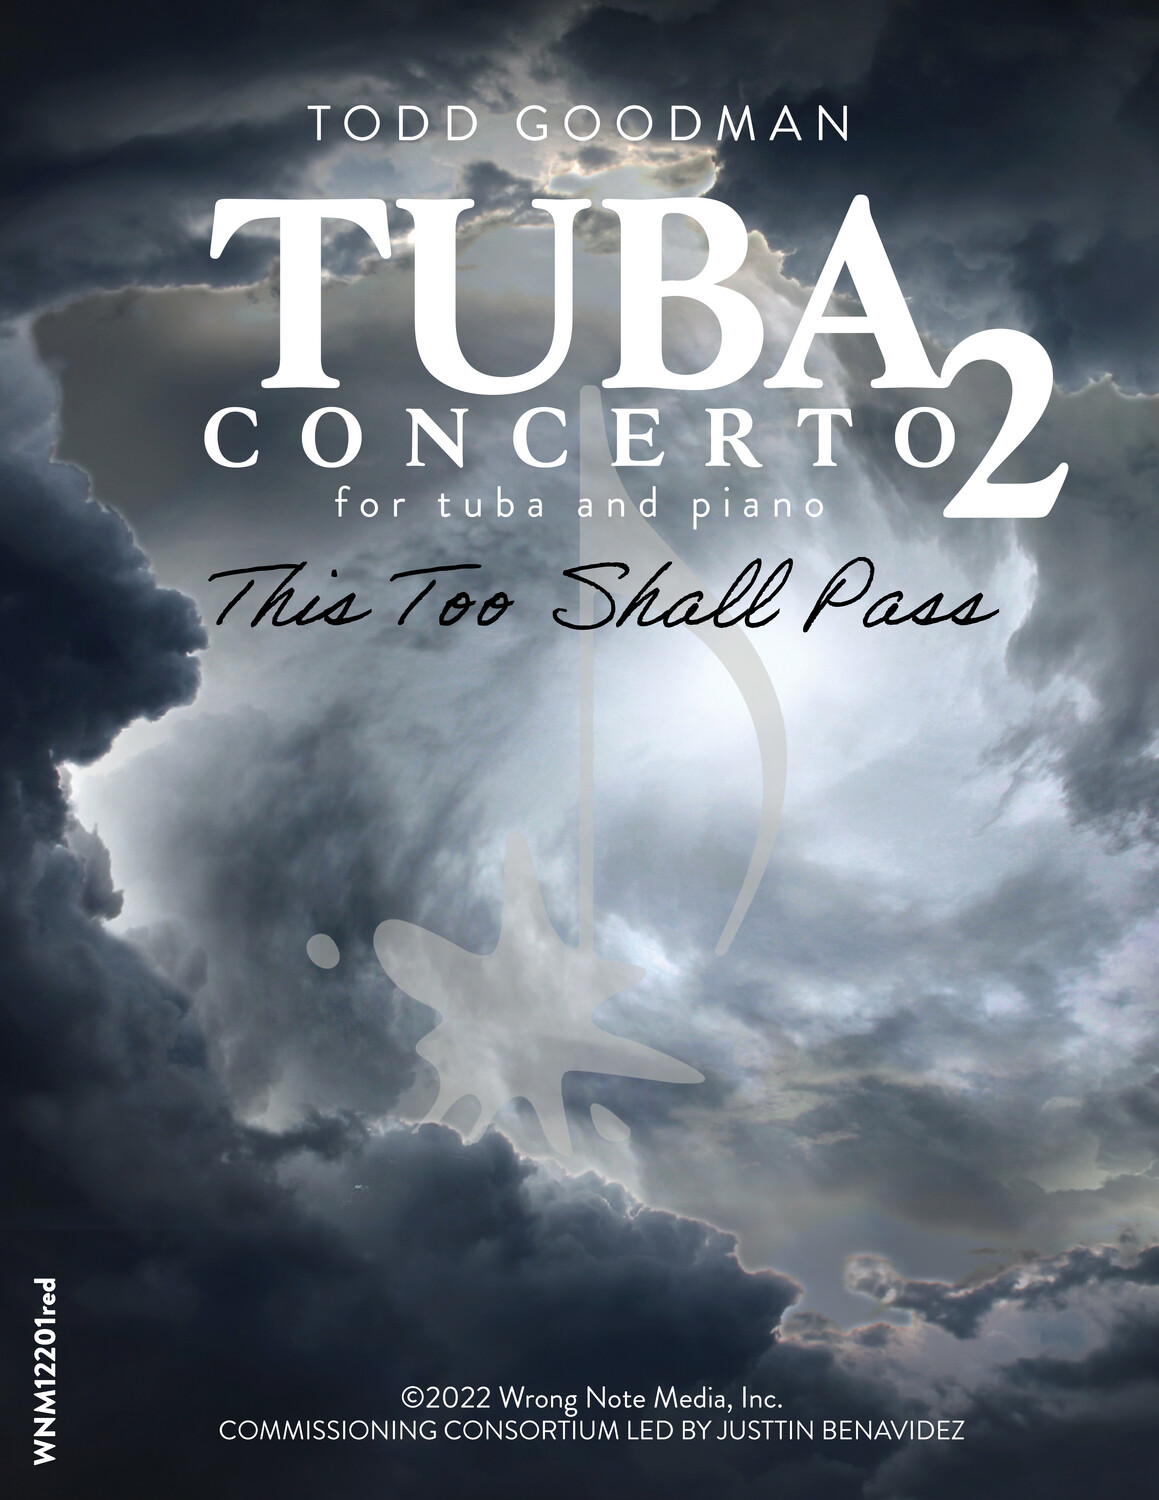 TUBA CONCERTO NO. 2 "This Too Shall Pass" by Todd Goodman